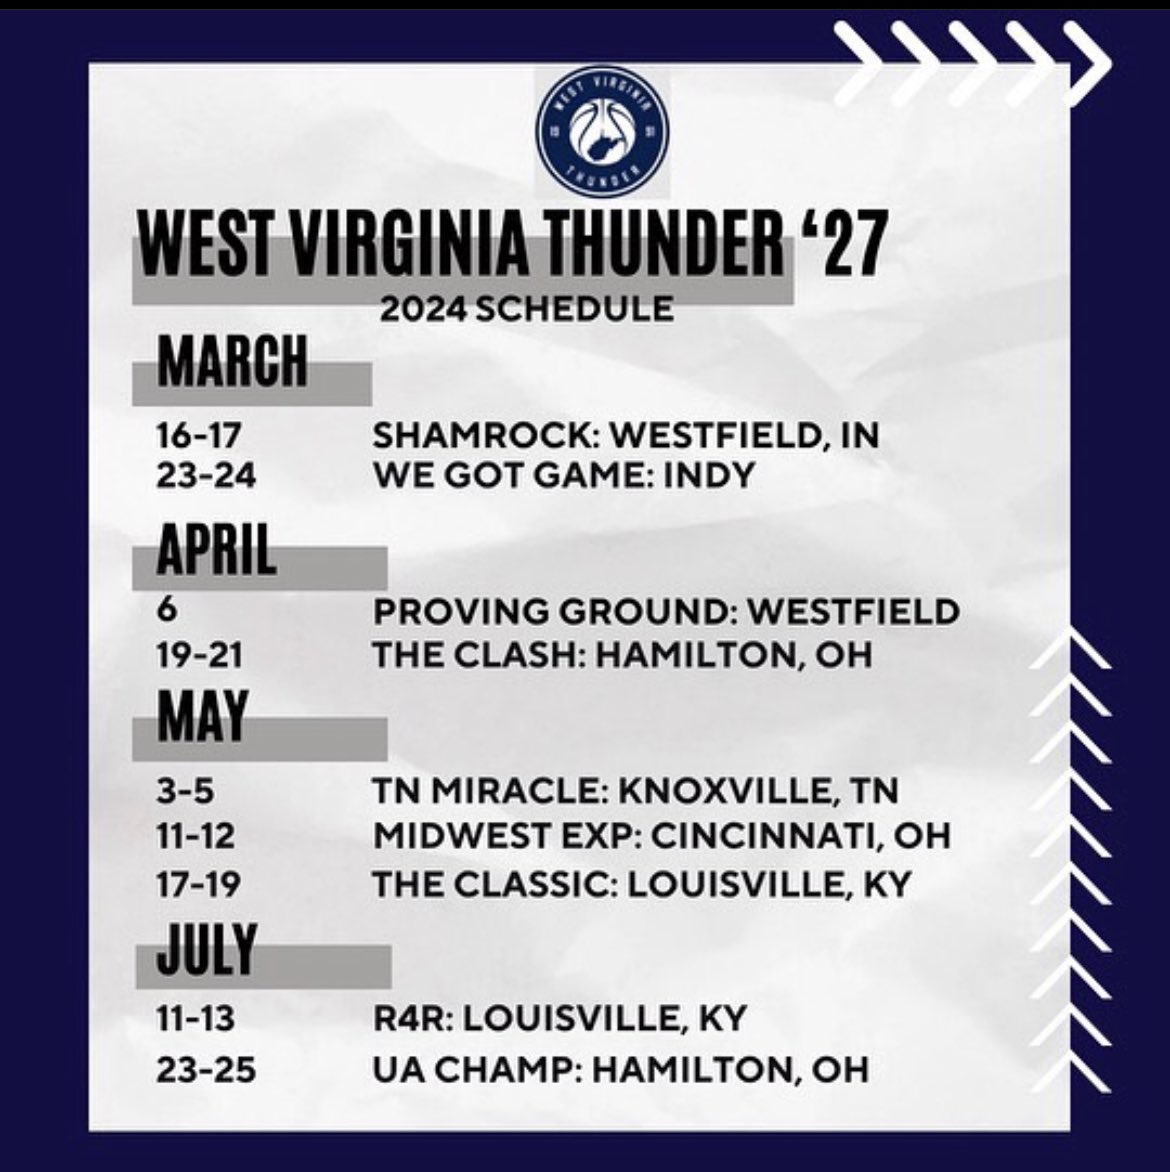 West Virginia Thunder Edwards ‘27 season schedule!! #AAU #basketball #girlsbasketball #WestVirginiaThunder @ChadEdw19566632